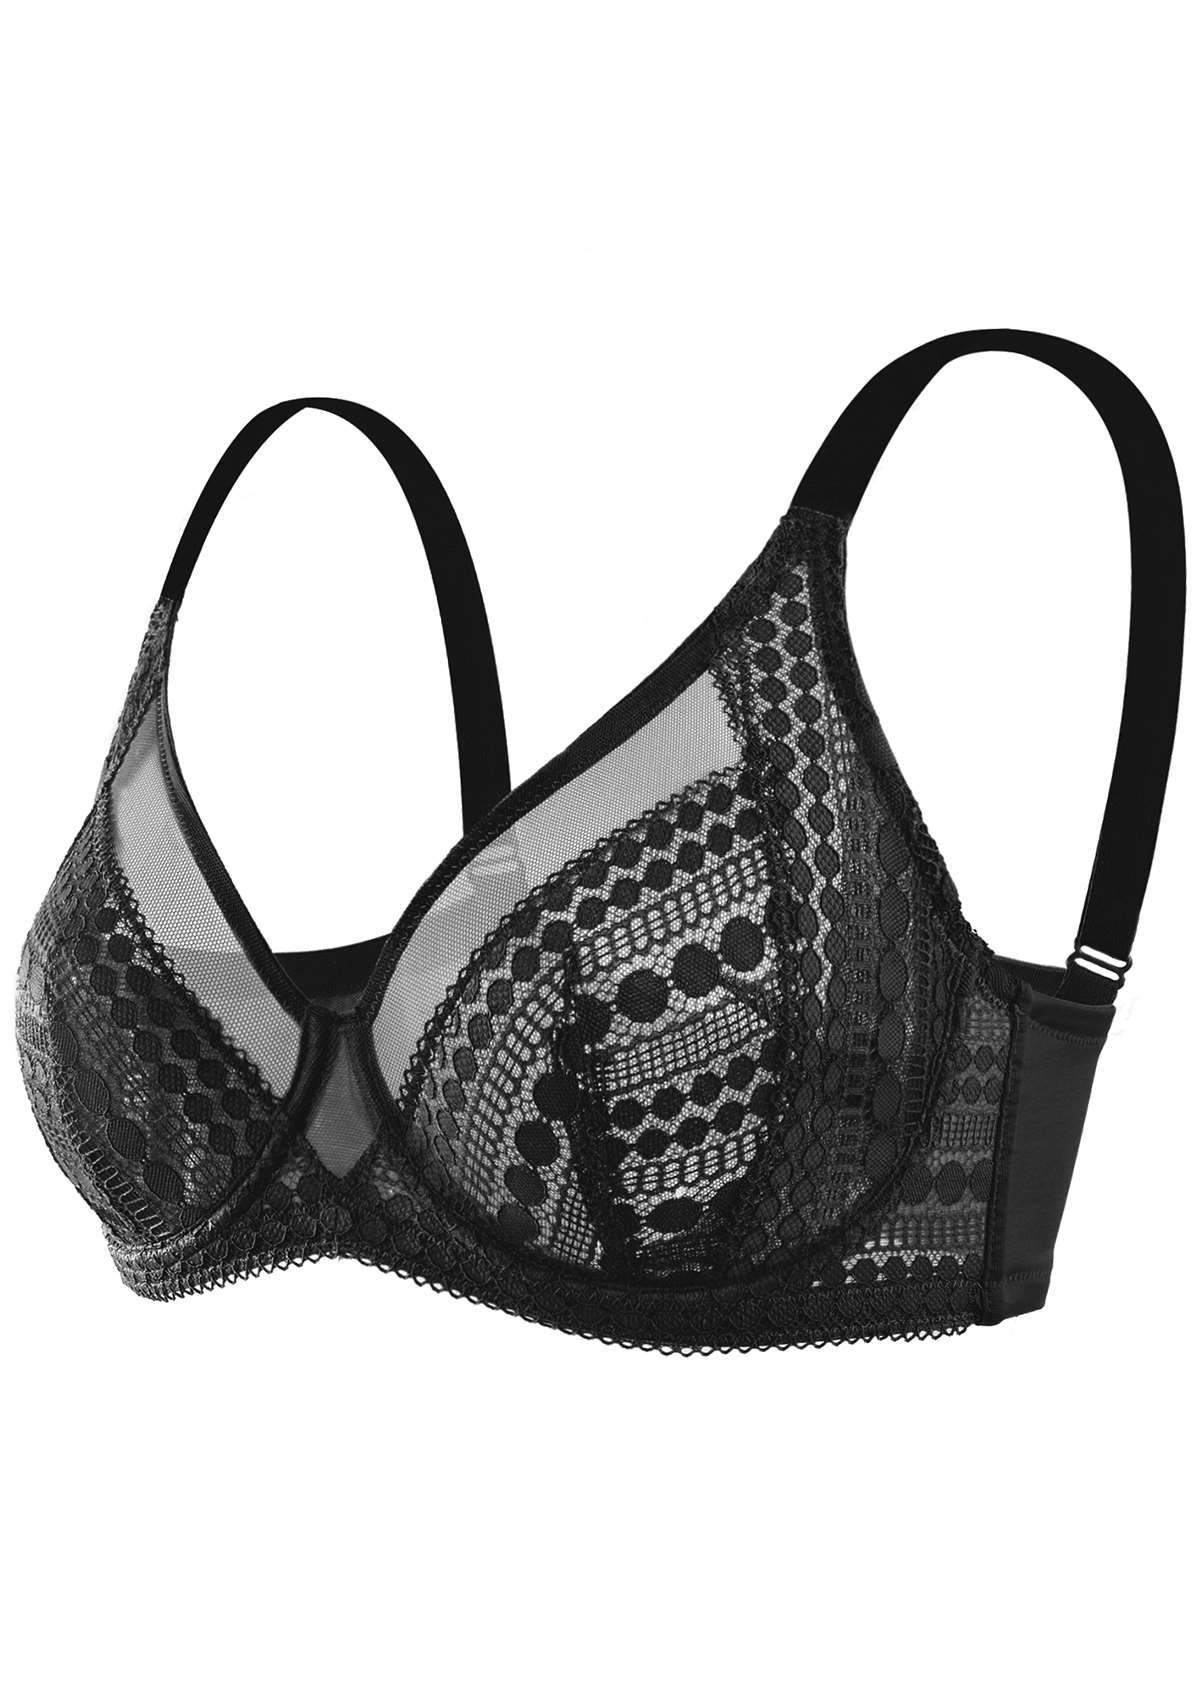 HSIA Heroine Matching Bra And Panties: Unlined Lace Unpadded Bra - Black / 40 / C